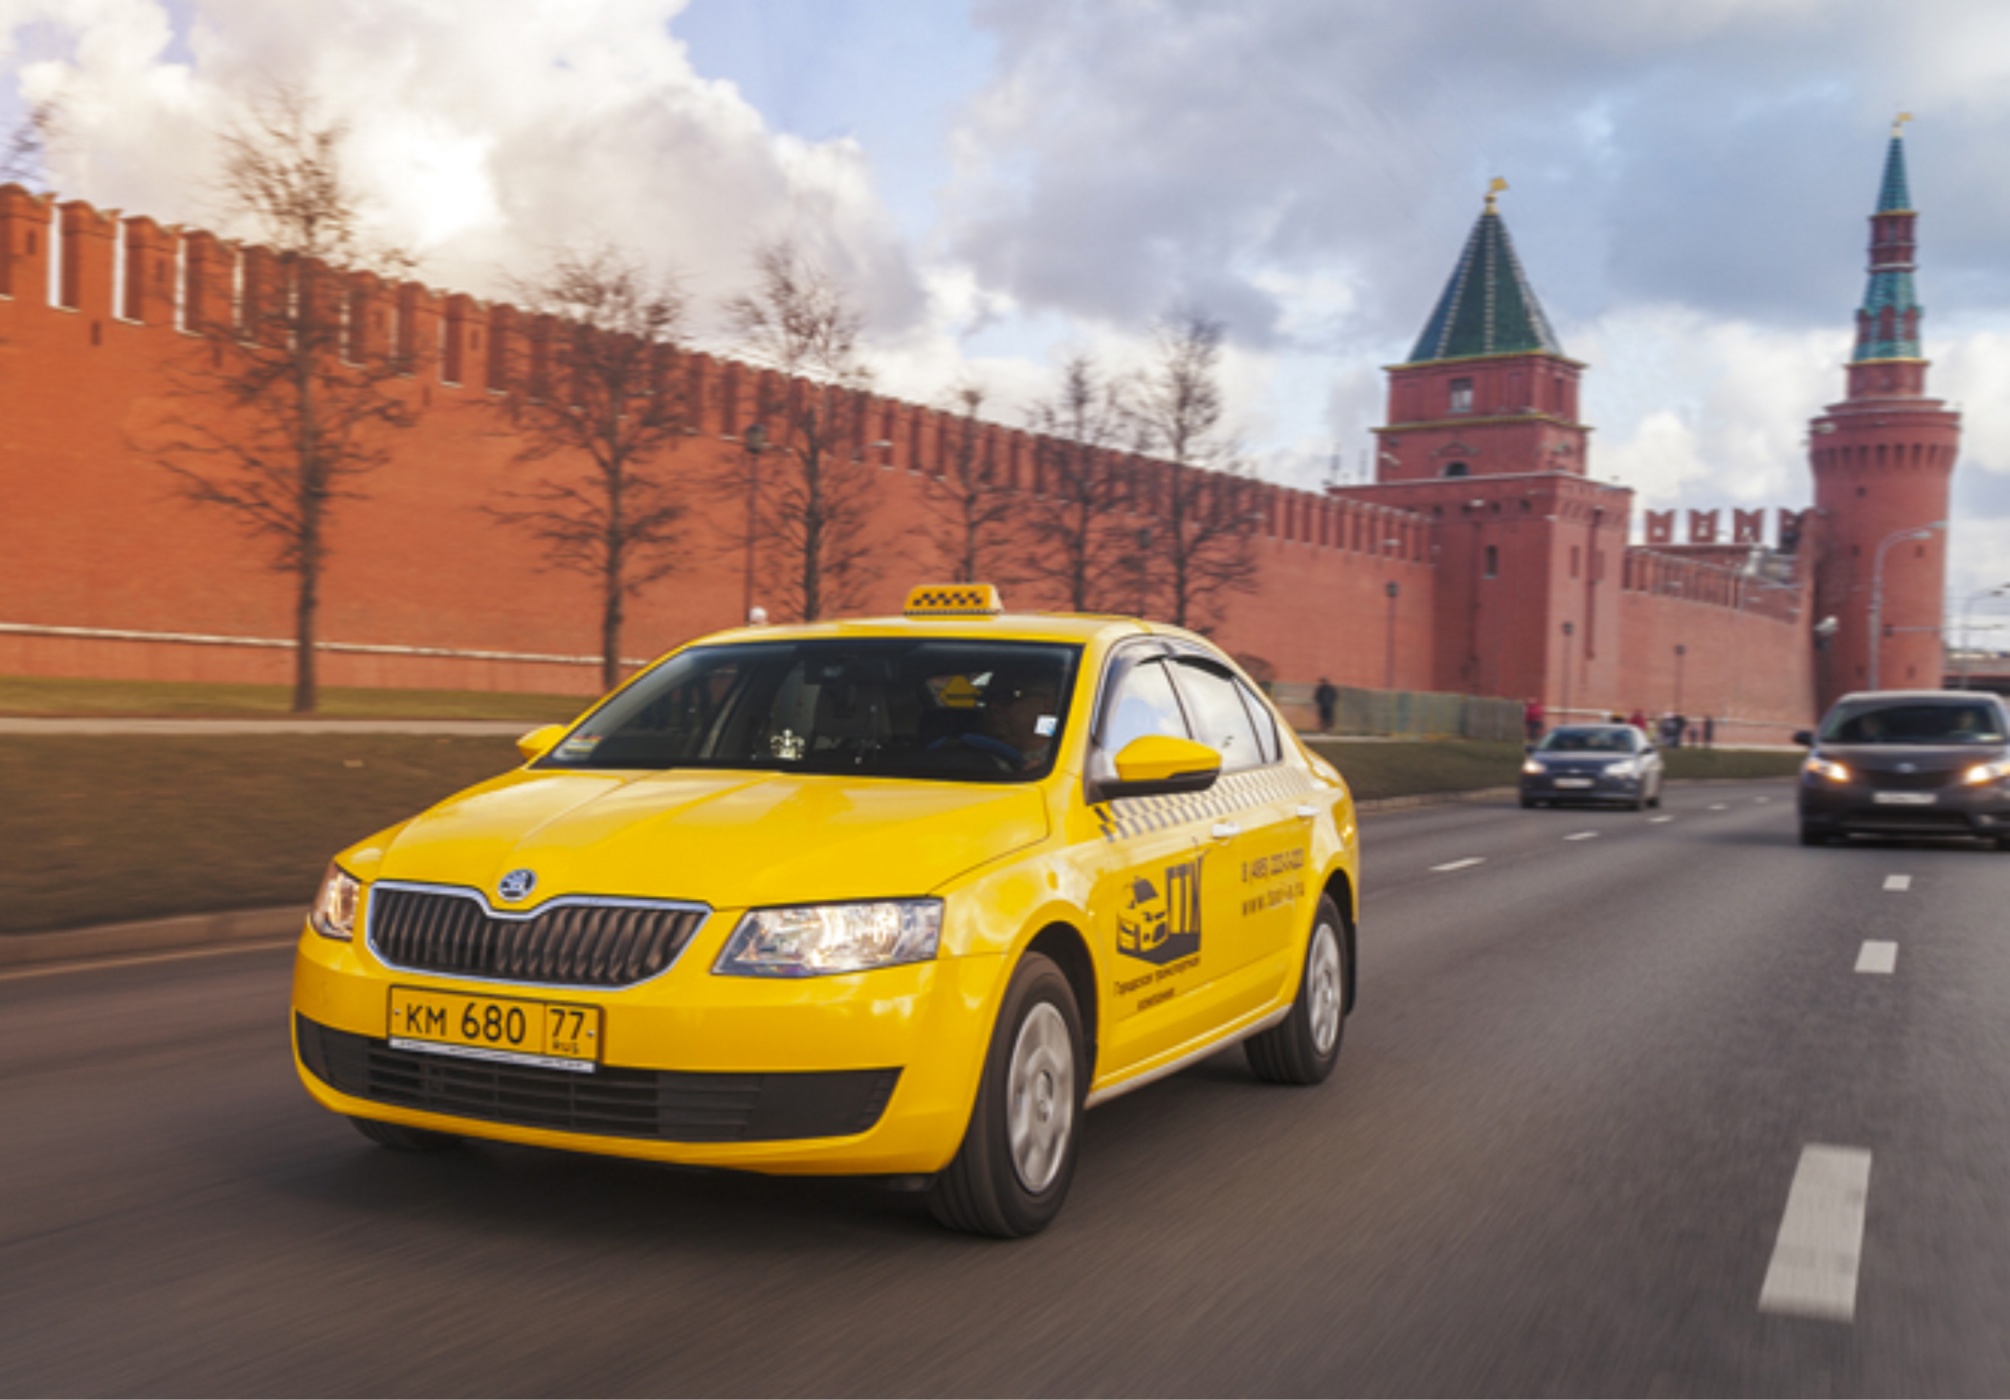 Таксим арбат. Машина "такси". Автомобиль «такси». Такса в машине. Такси Москва.